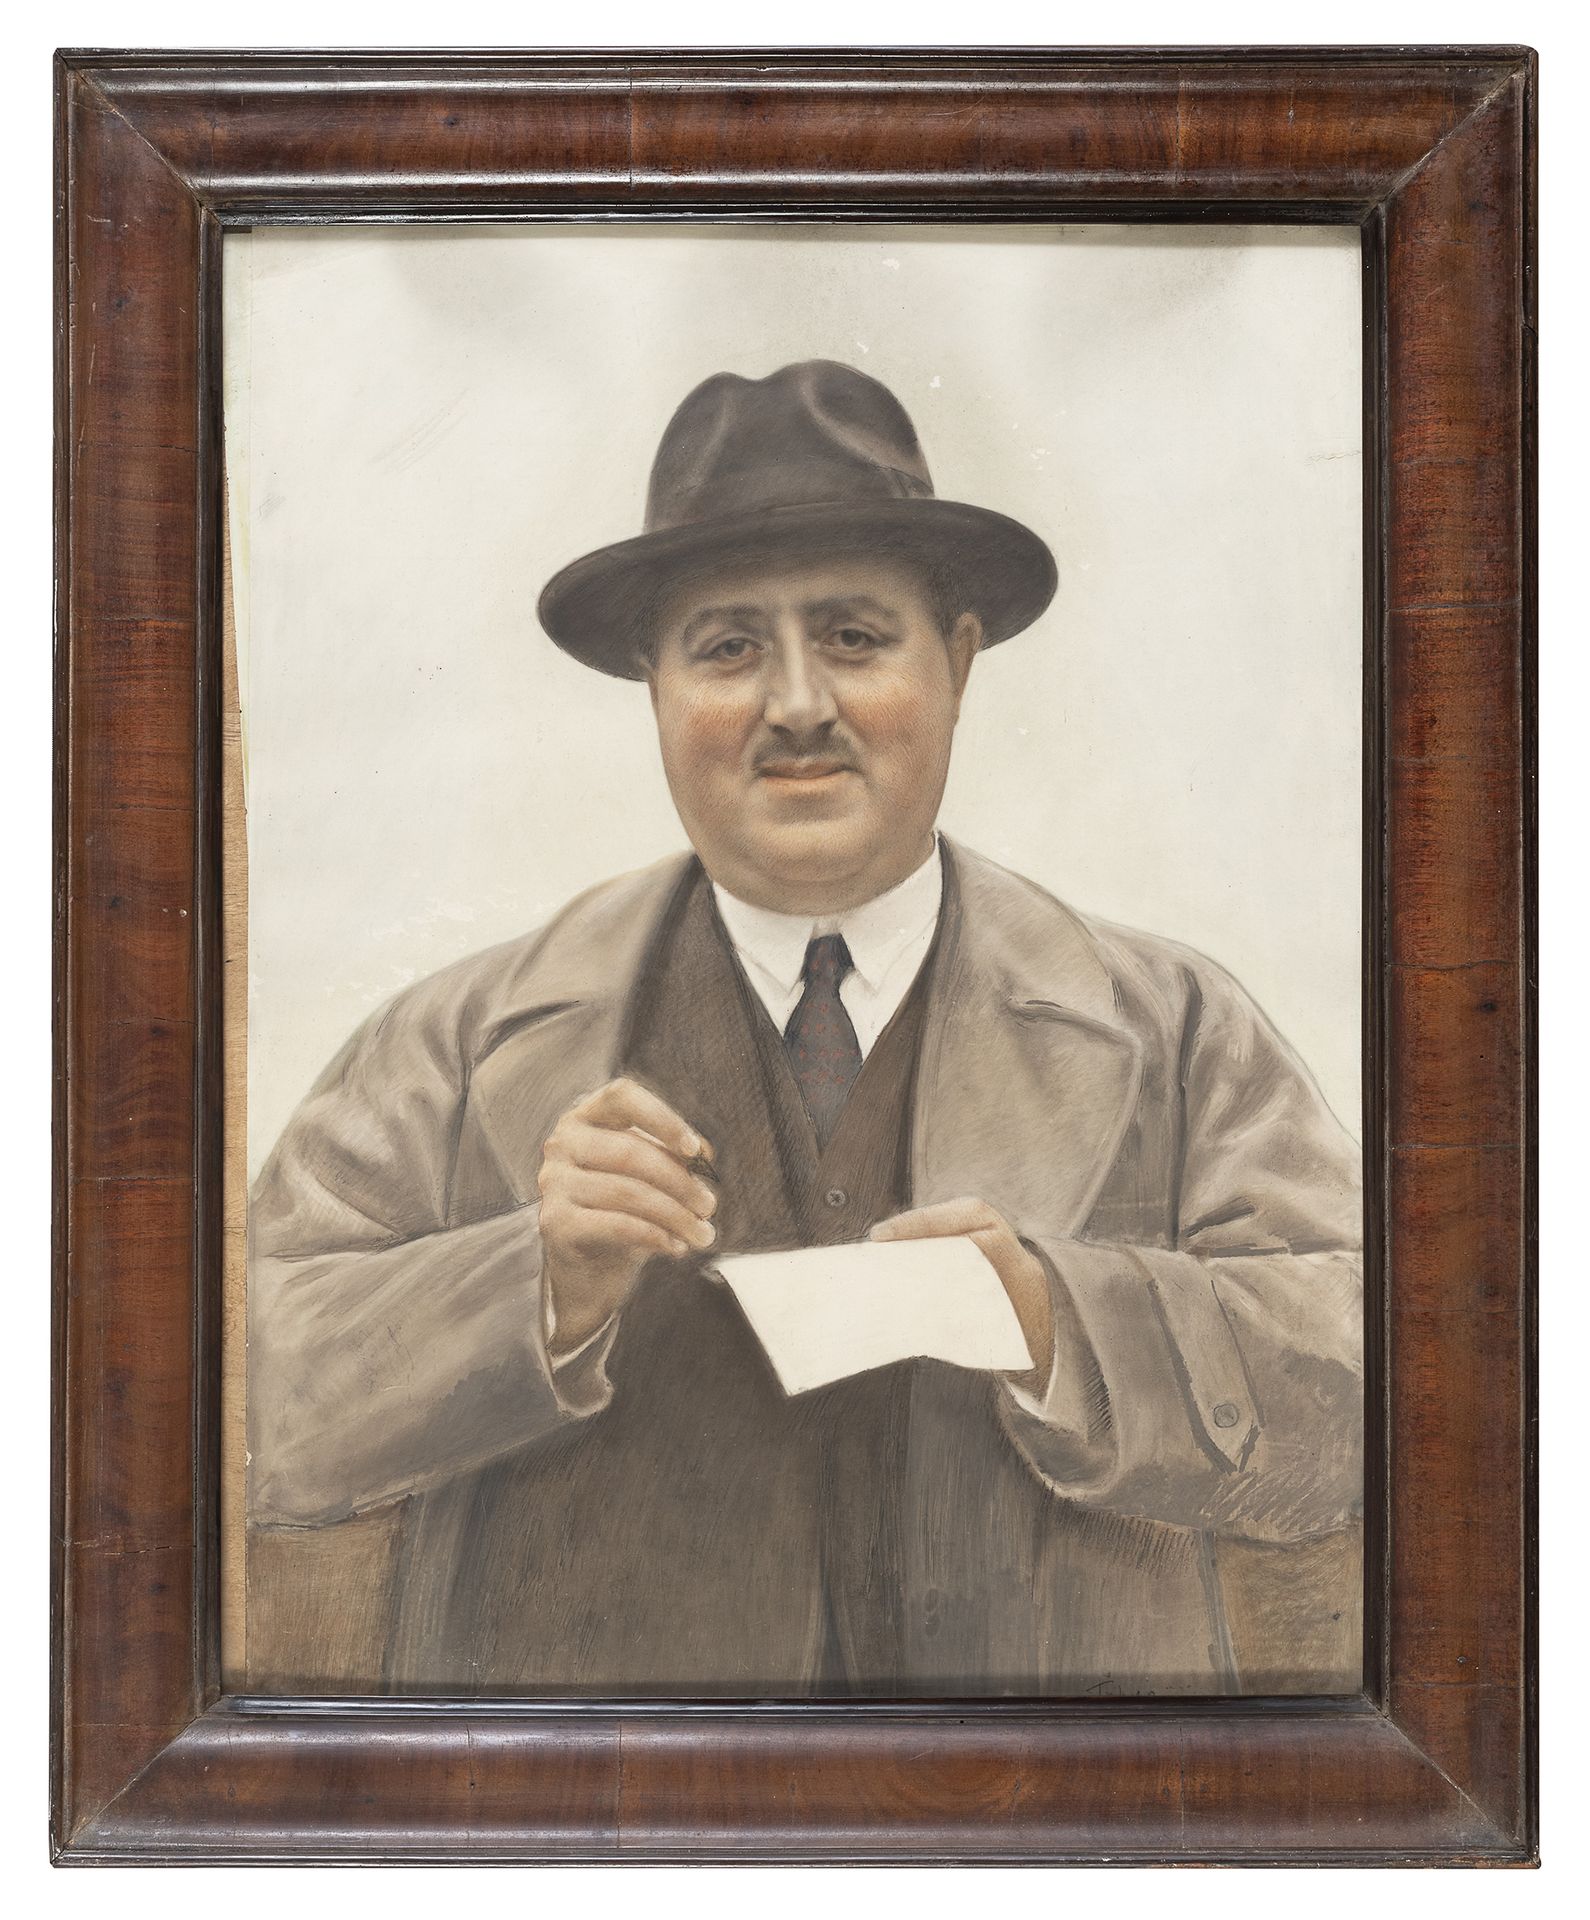 Null 20世纪意大利画家



一个记者的画像

纸上混合媒体，68 x 52 cm

无符号

桃花心木框架